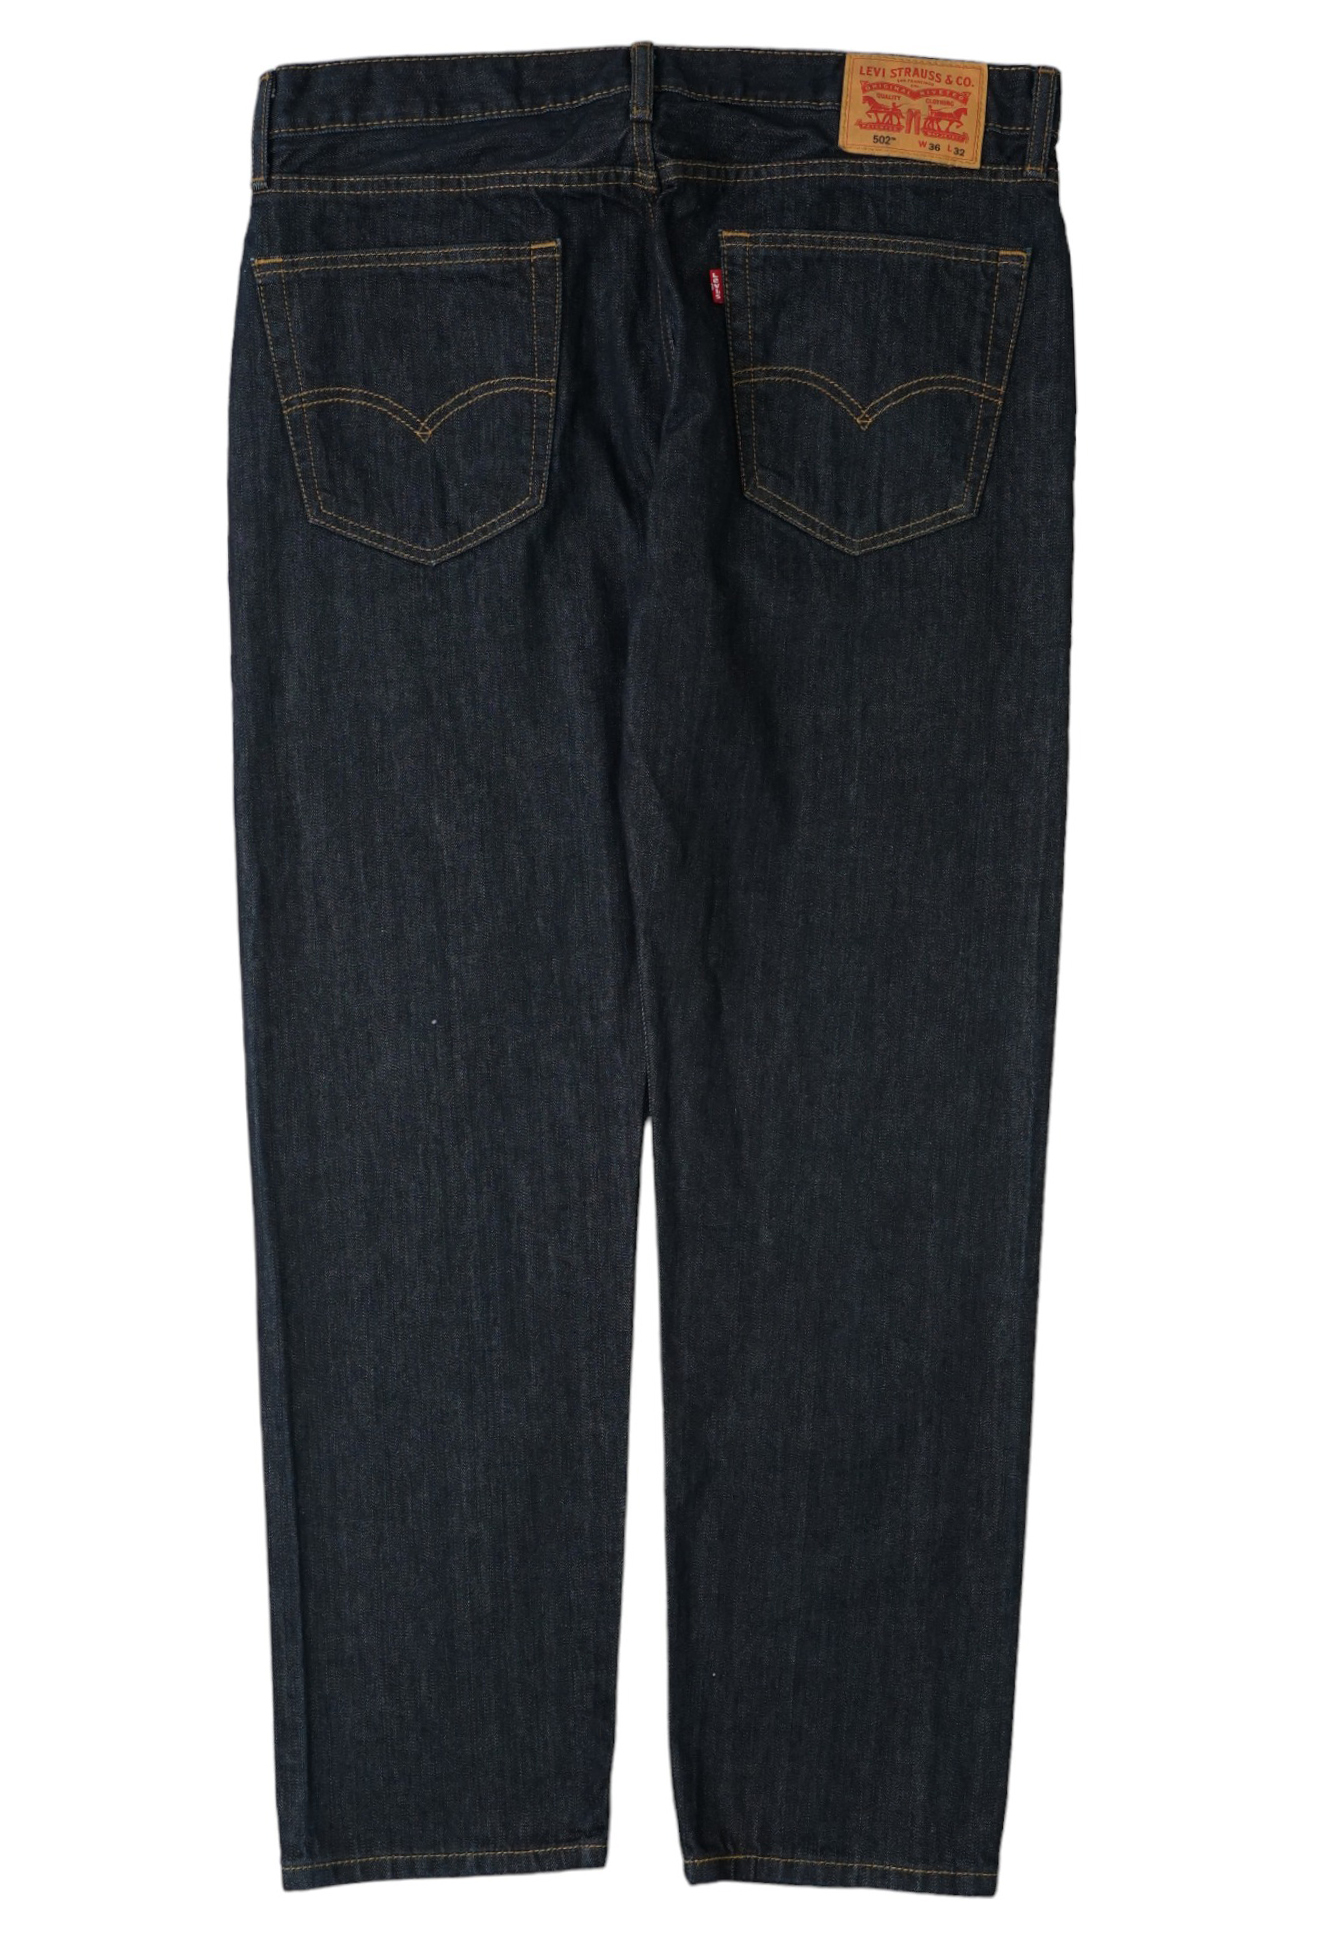 Vintage Levis 502 Tapered Blue Jeans - W36 L30 | eBay